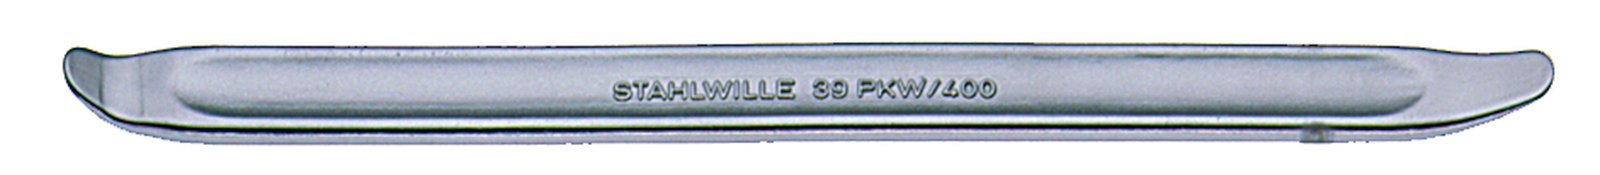 Łyżka do opon 39PKW L=400mm STAHLWILLE